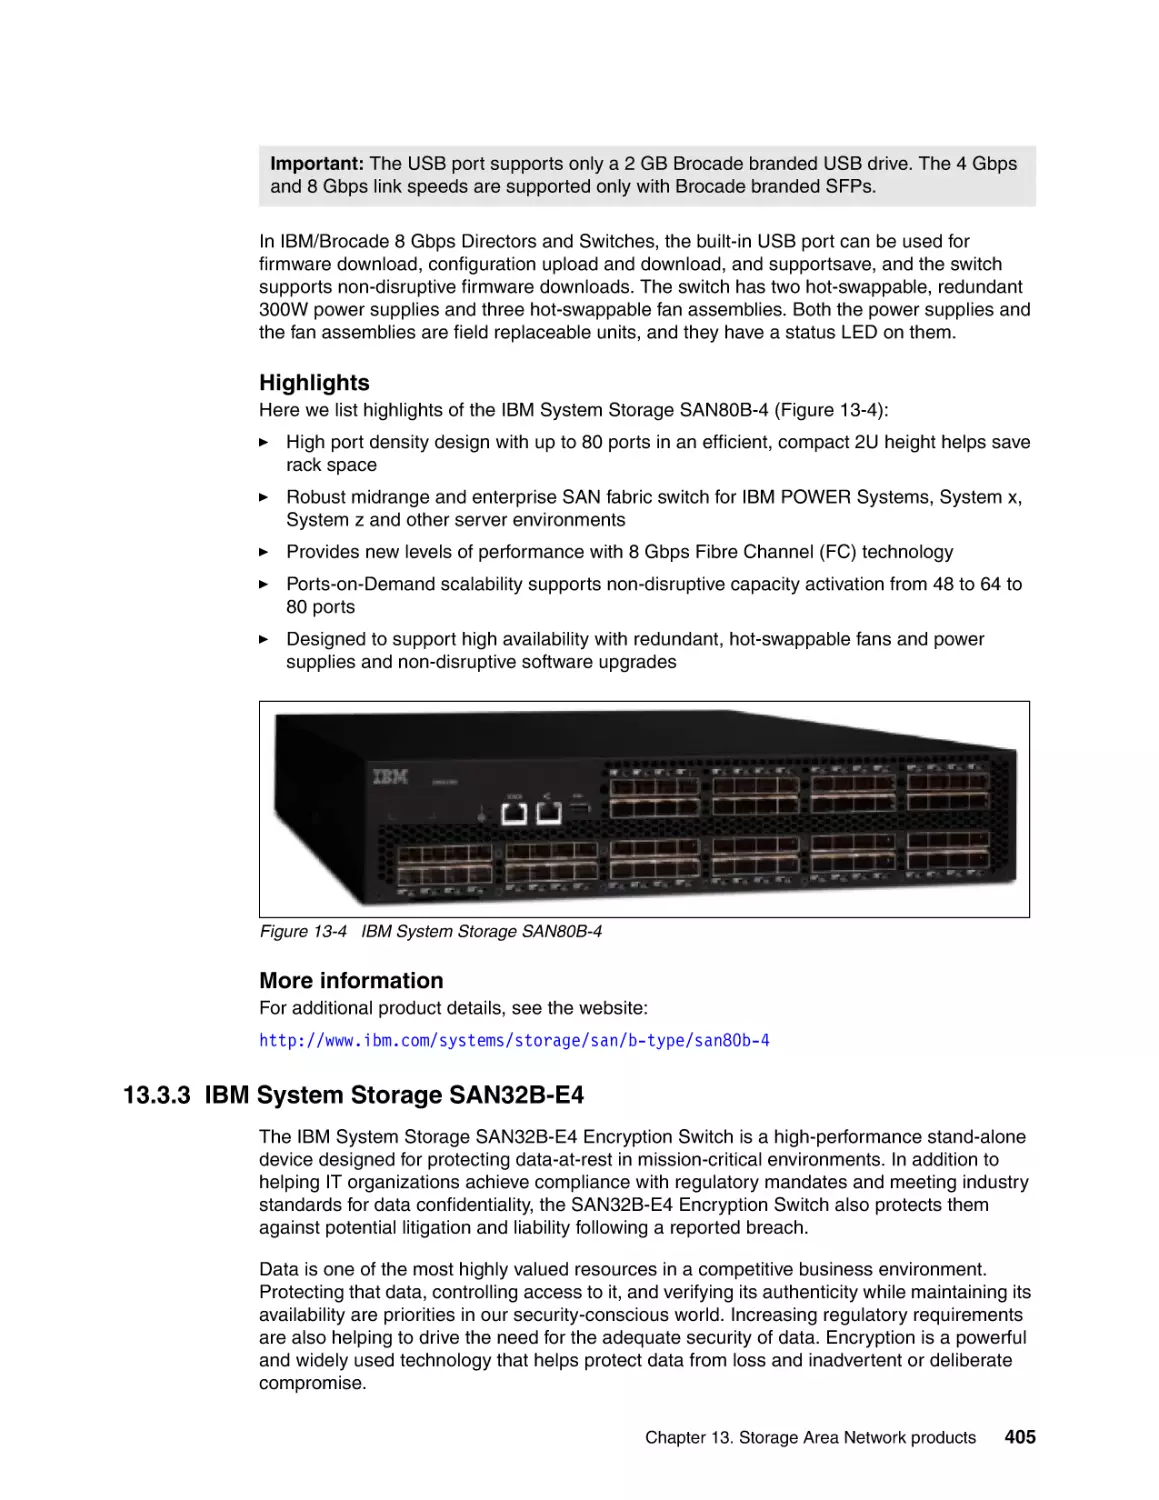 13.3.3 IBM System Storage SAN32B-E4